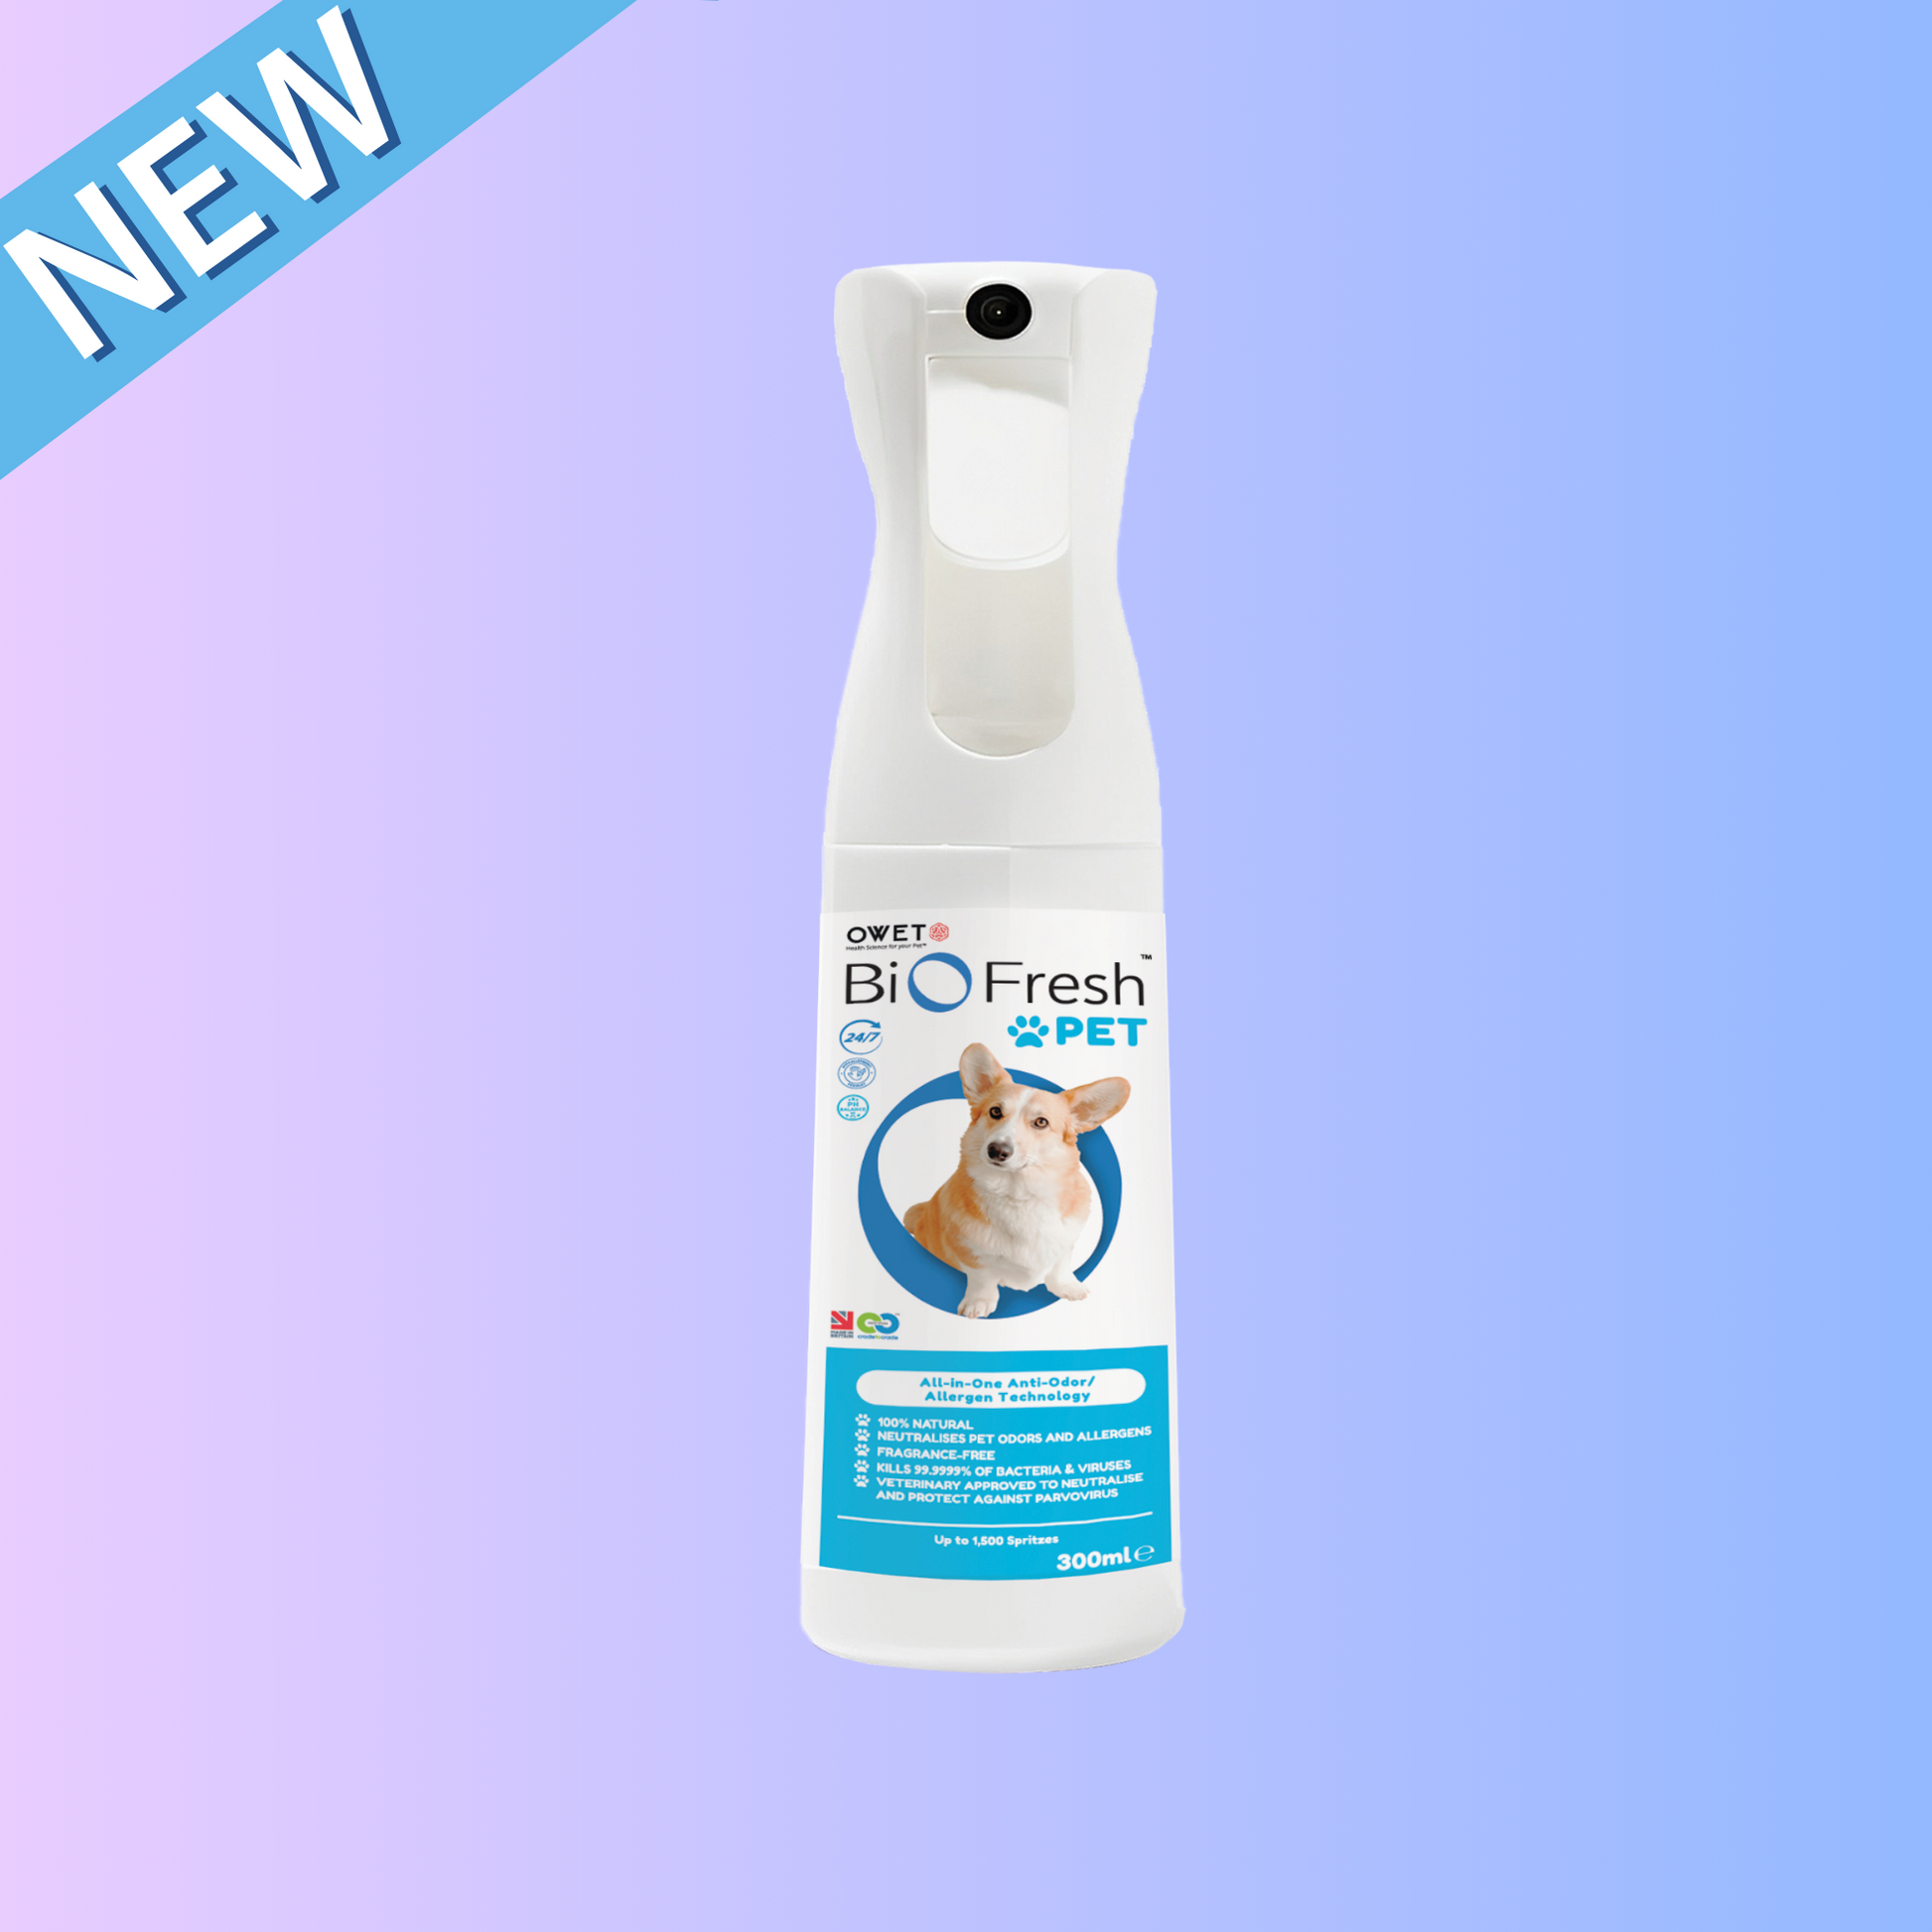 Shop gen-biotic's Biofresh Anti-Aeroallergen/ Anti-Viral Spray Technology. Clinically proven safe and effective. Shop now.